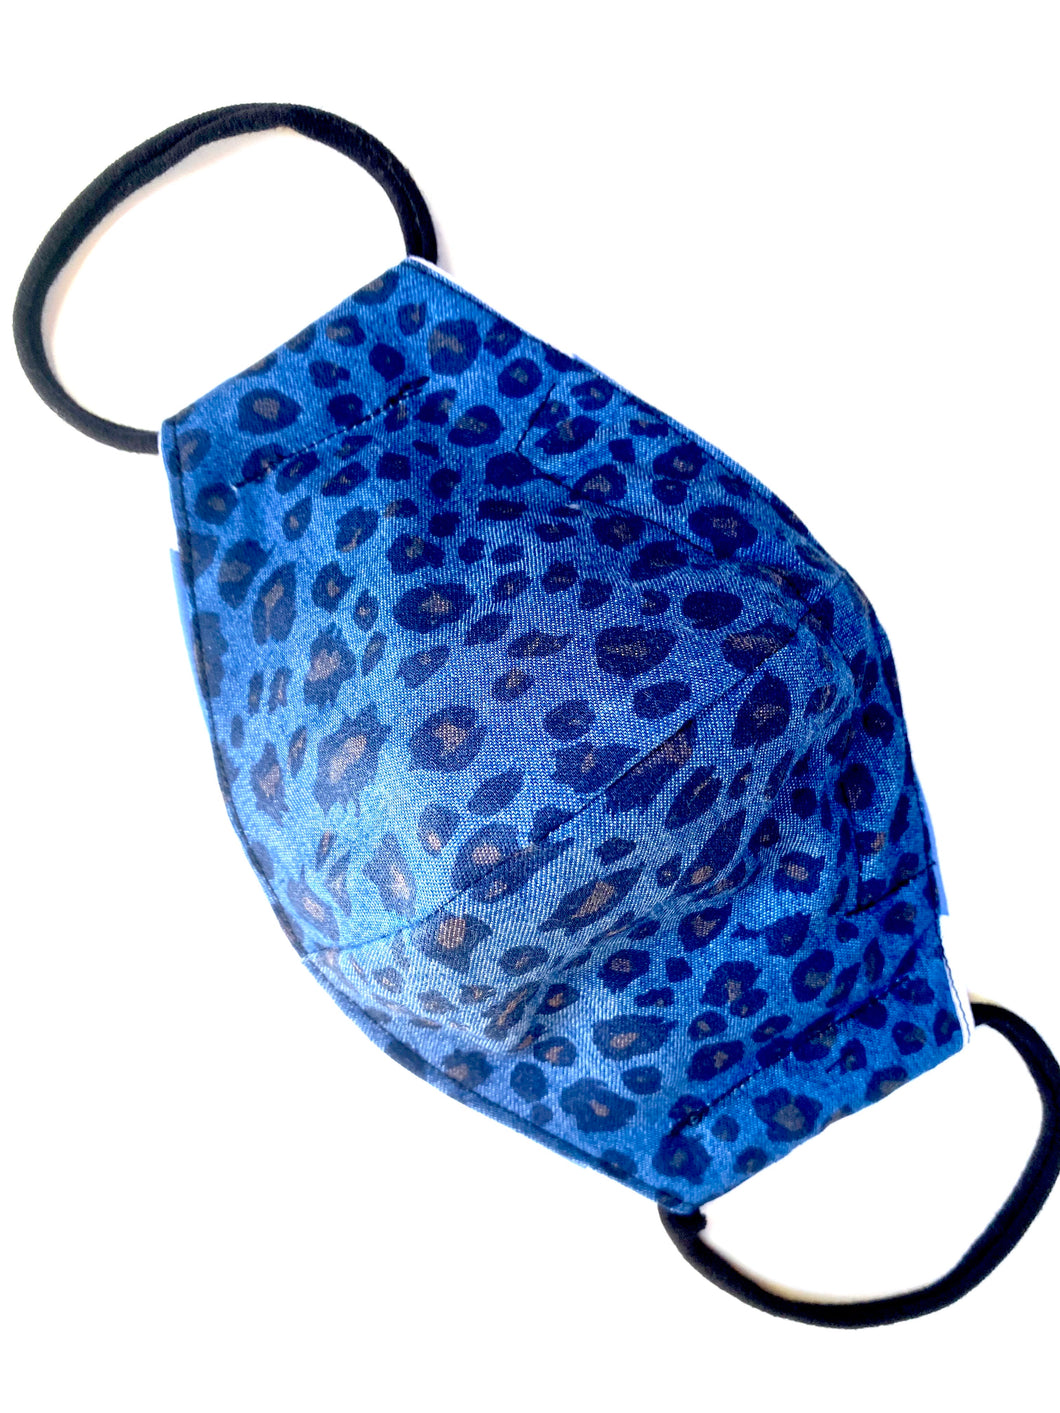 Leopard - Denim Blue - Adult Face Mask - 3 Layers, Nose Wire, Adjustable Straps And Pocket For Filter.